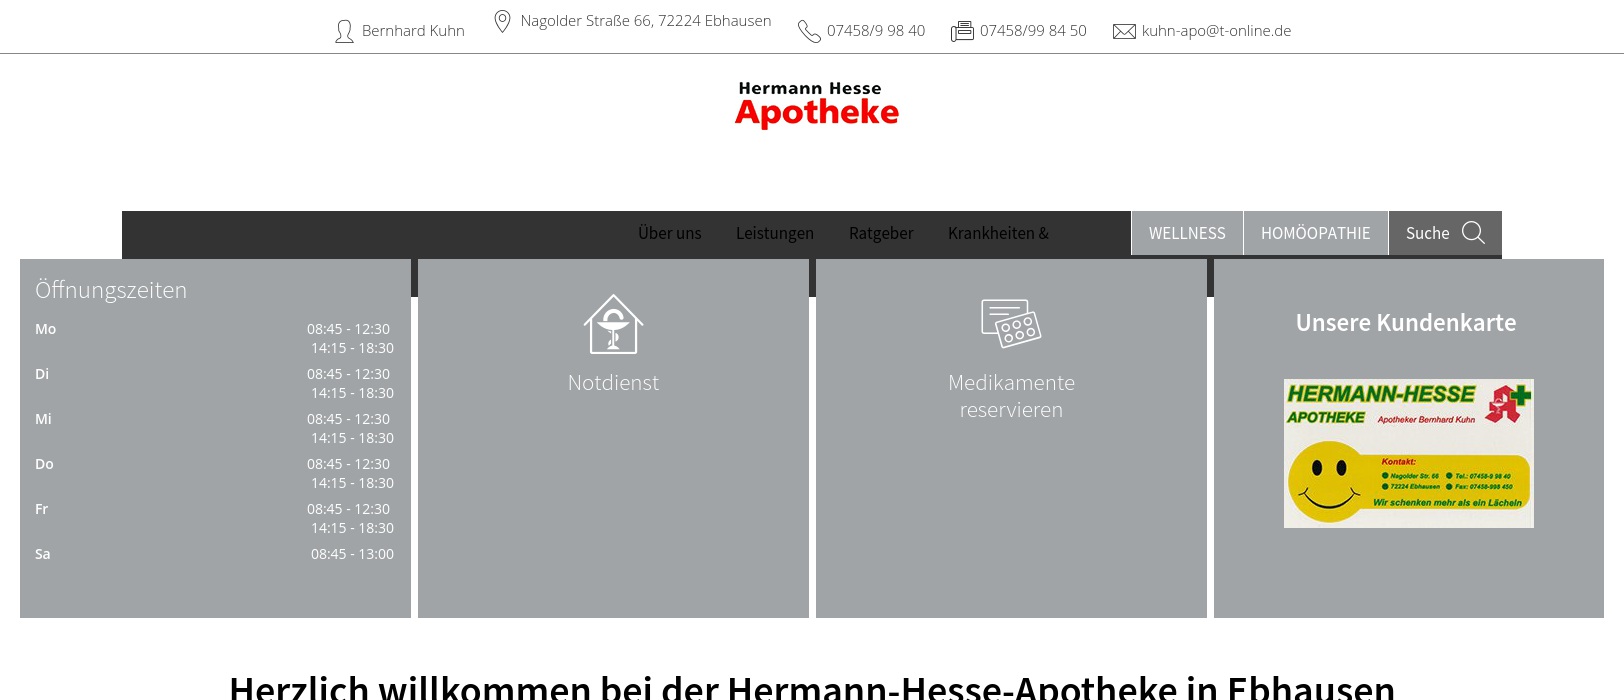 Hermann-Hesse-Apotheke